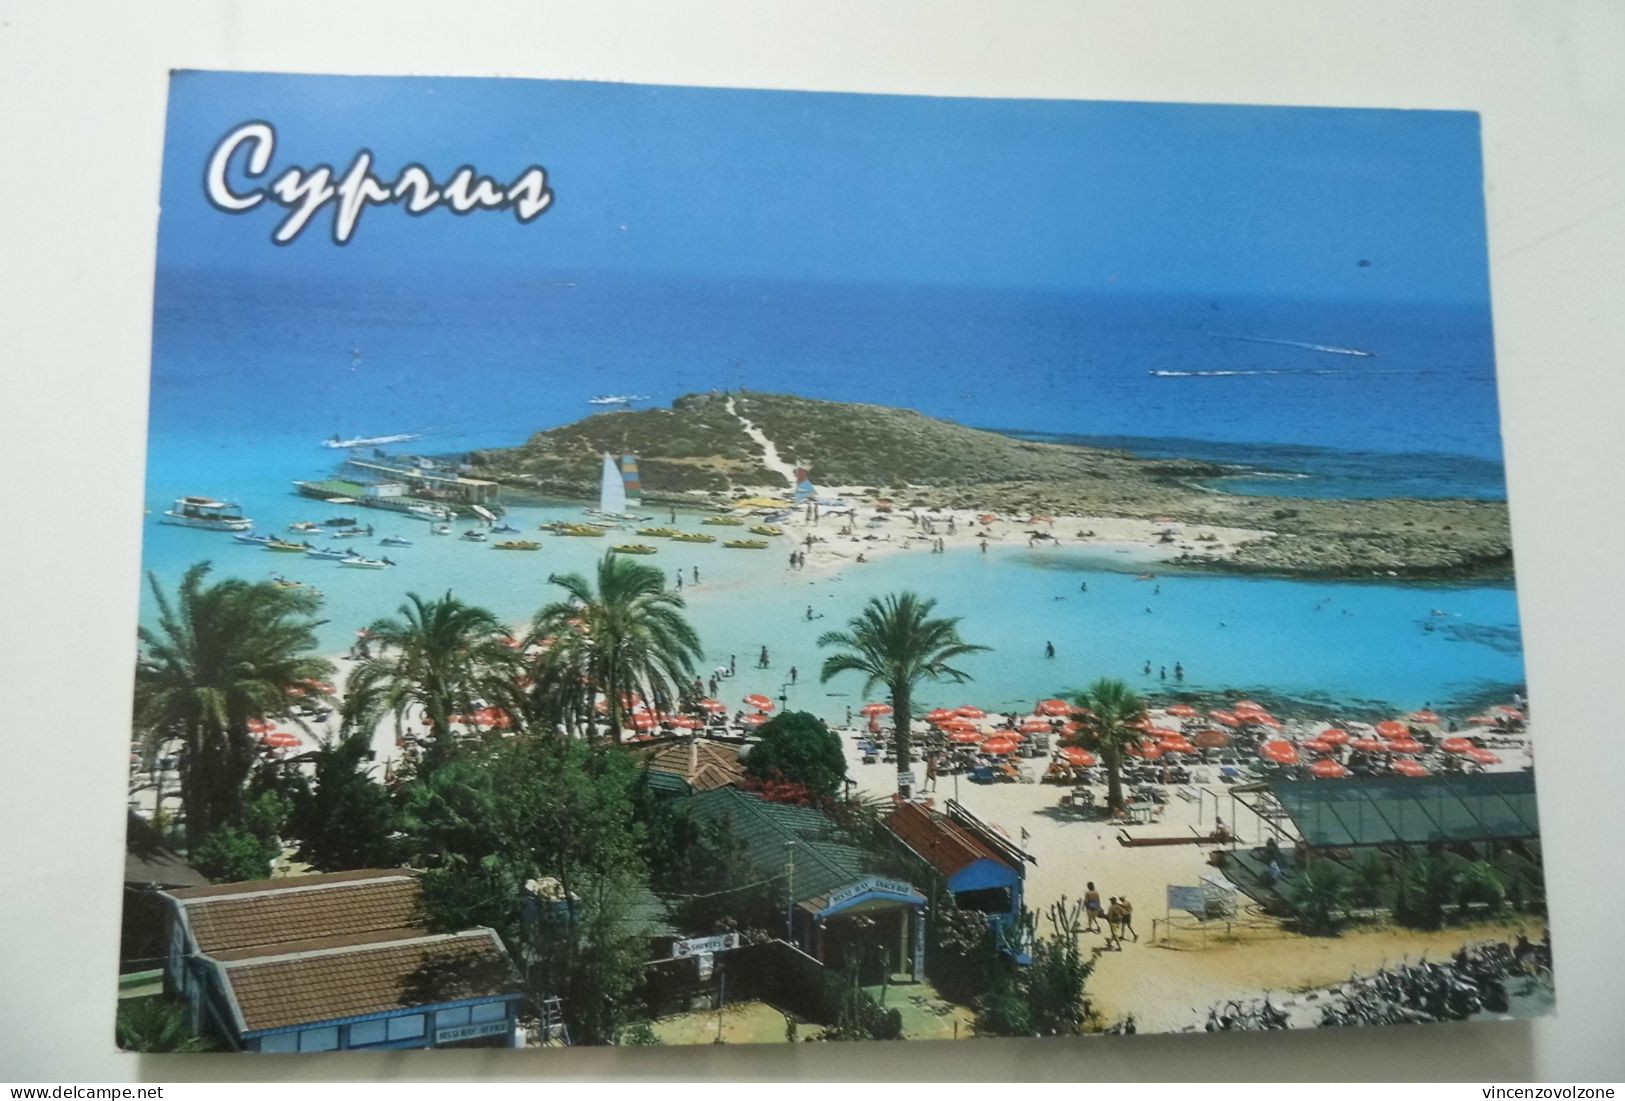 Cartolina Viaggiata "CYPRUS" 2000 - Chypre